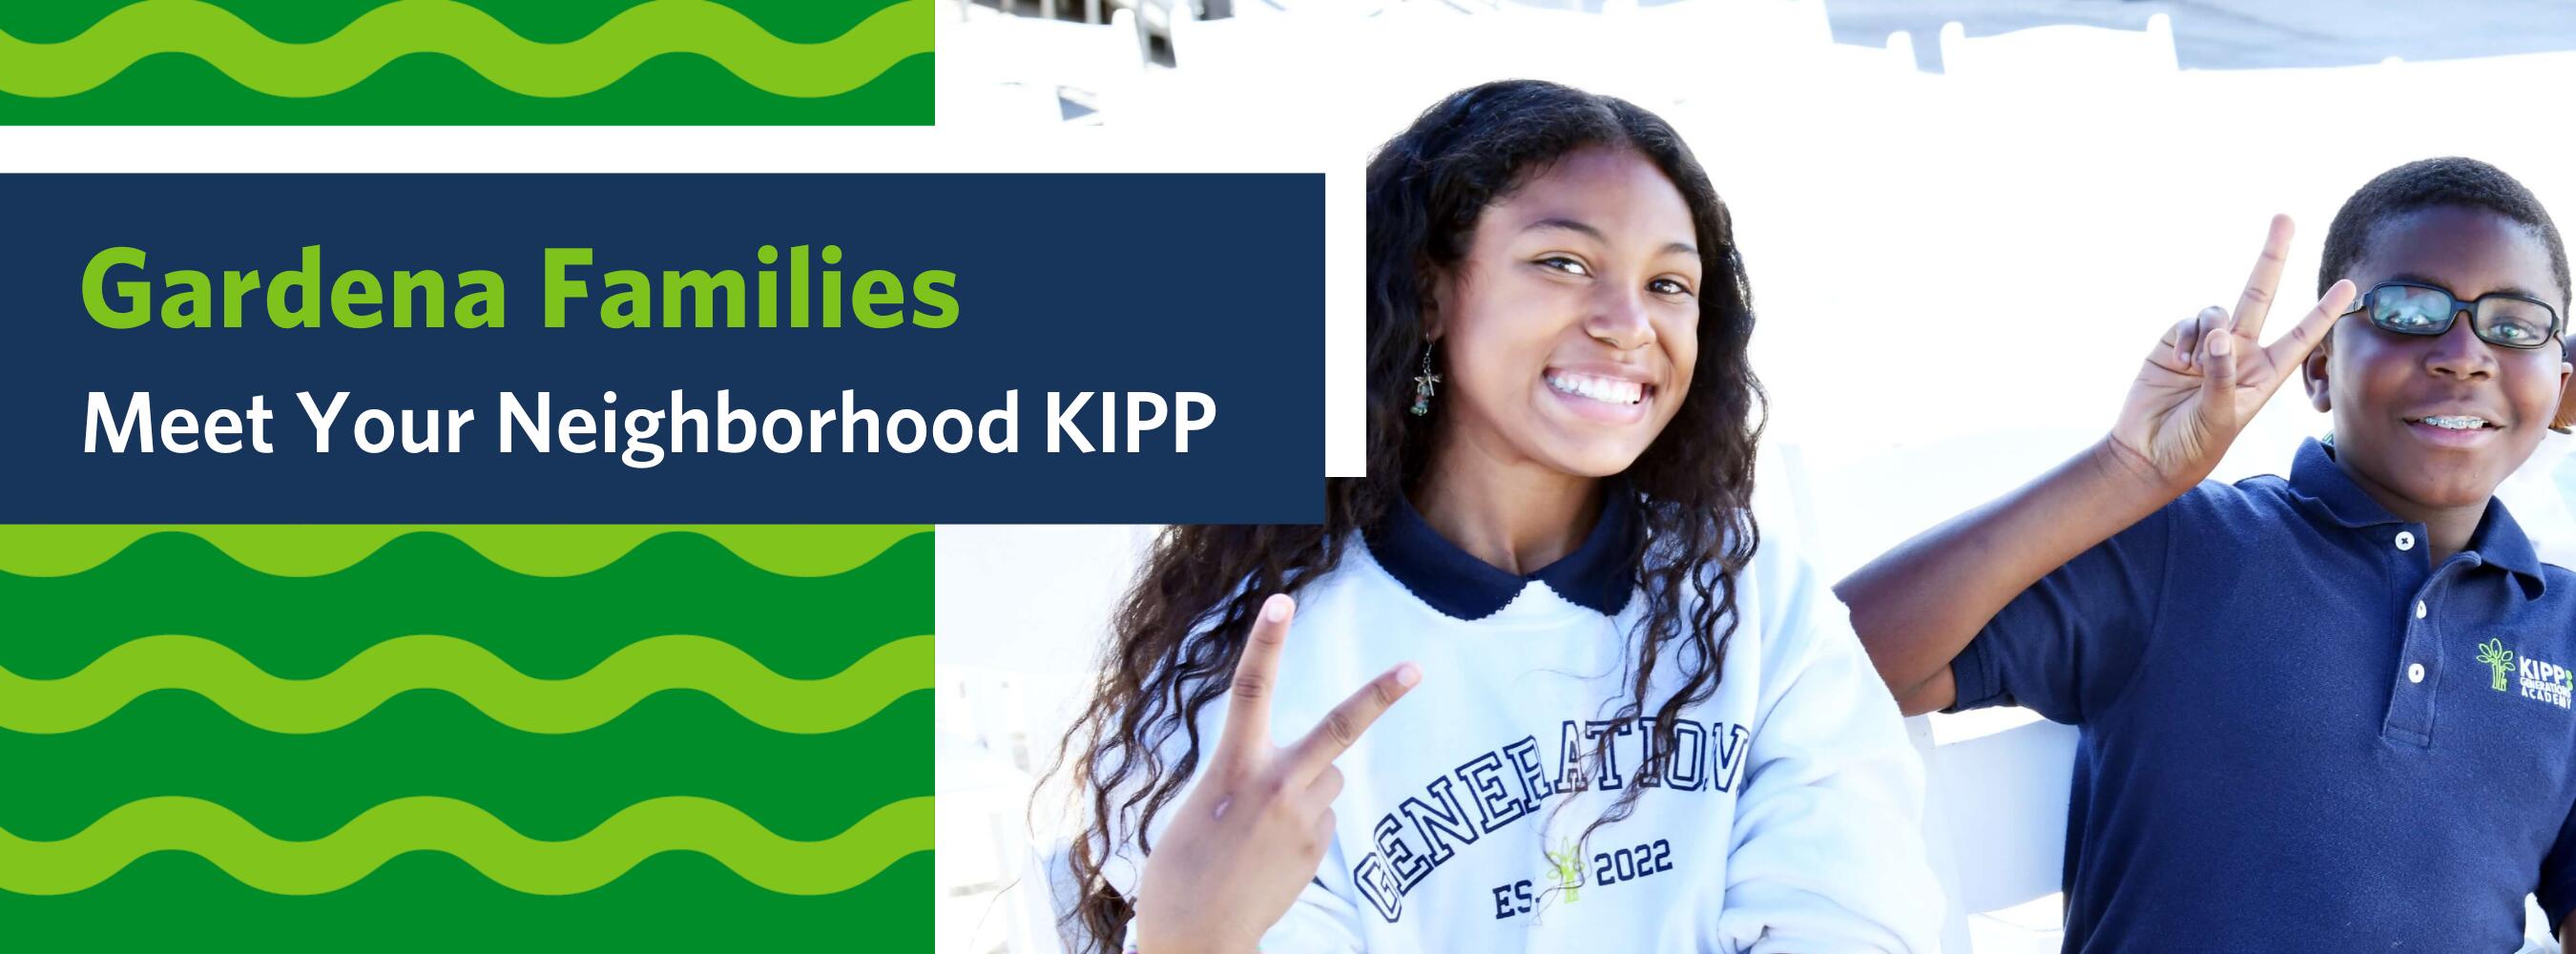 Gardena Families: Meet Your Neighborhood KIPP